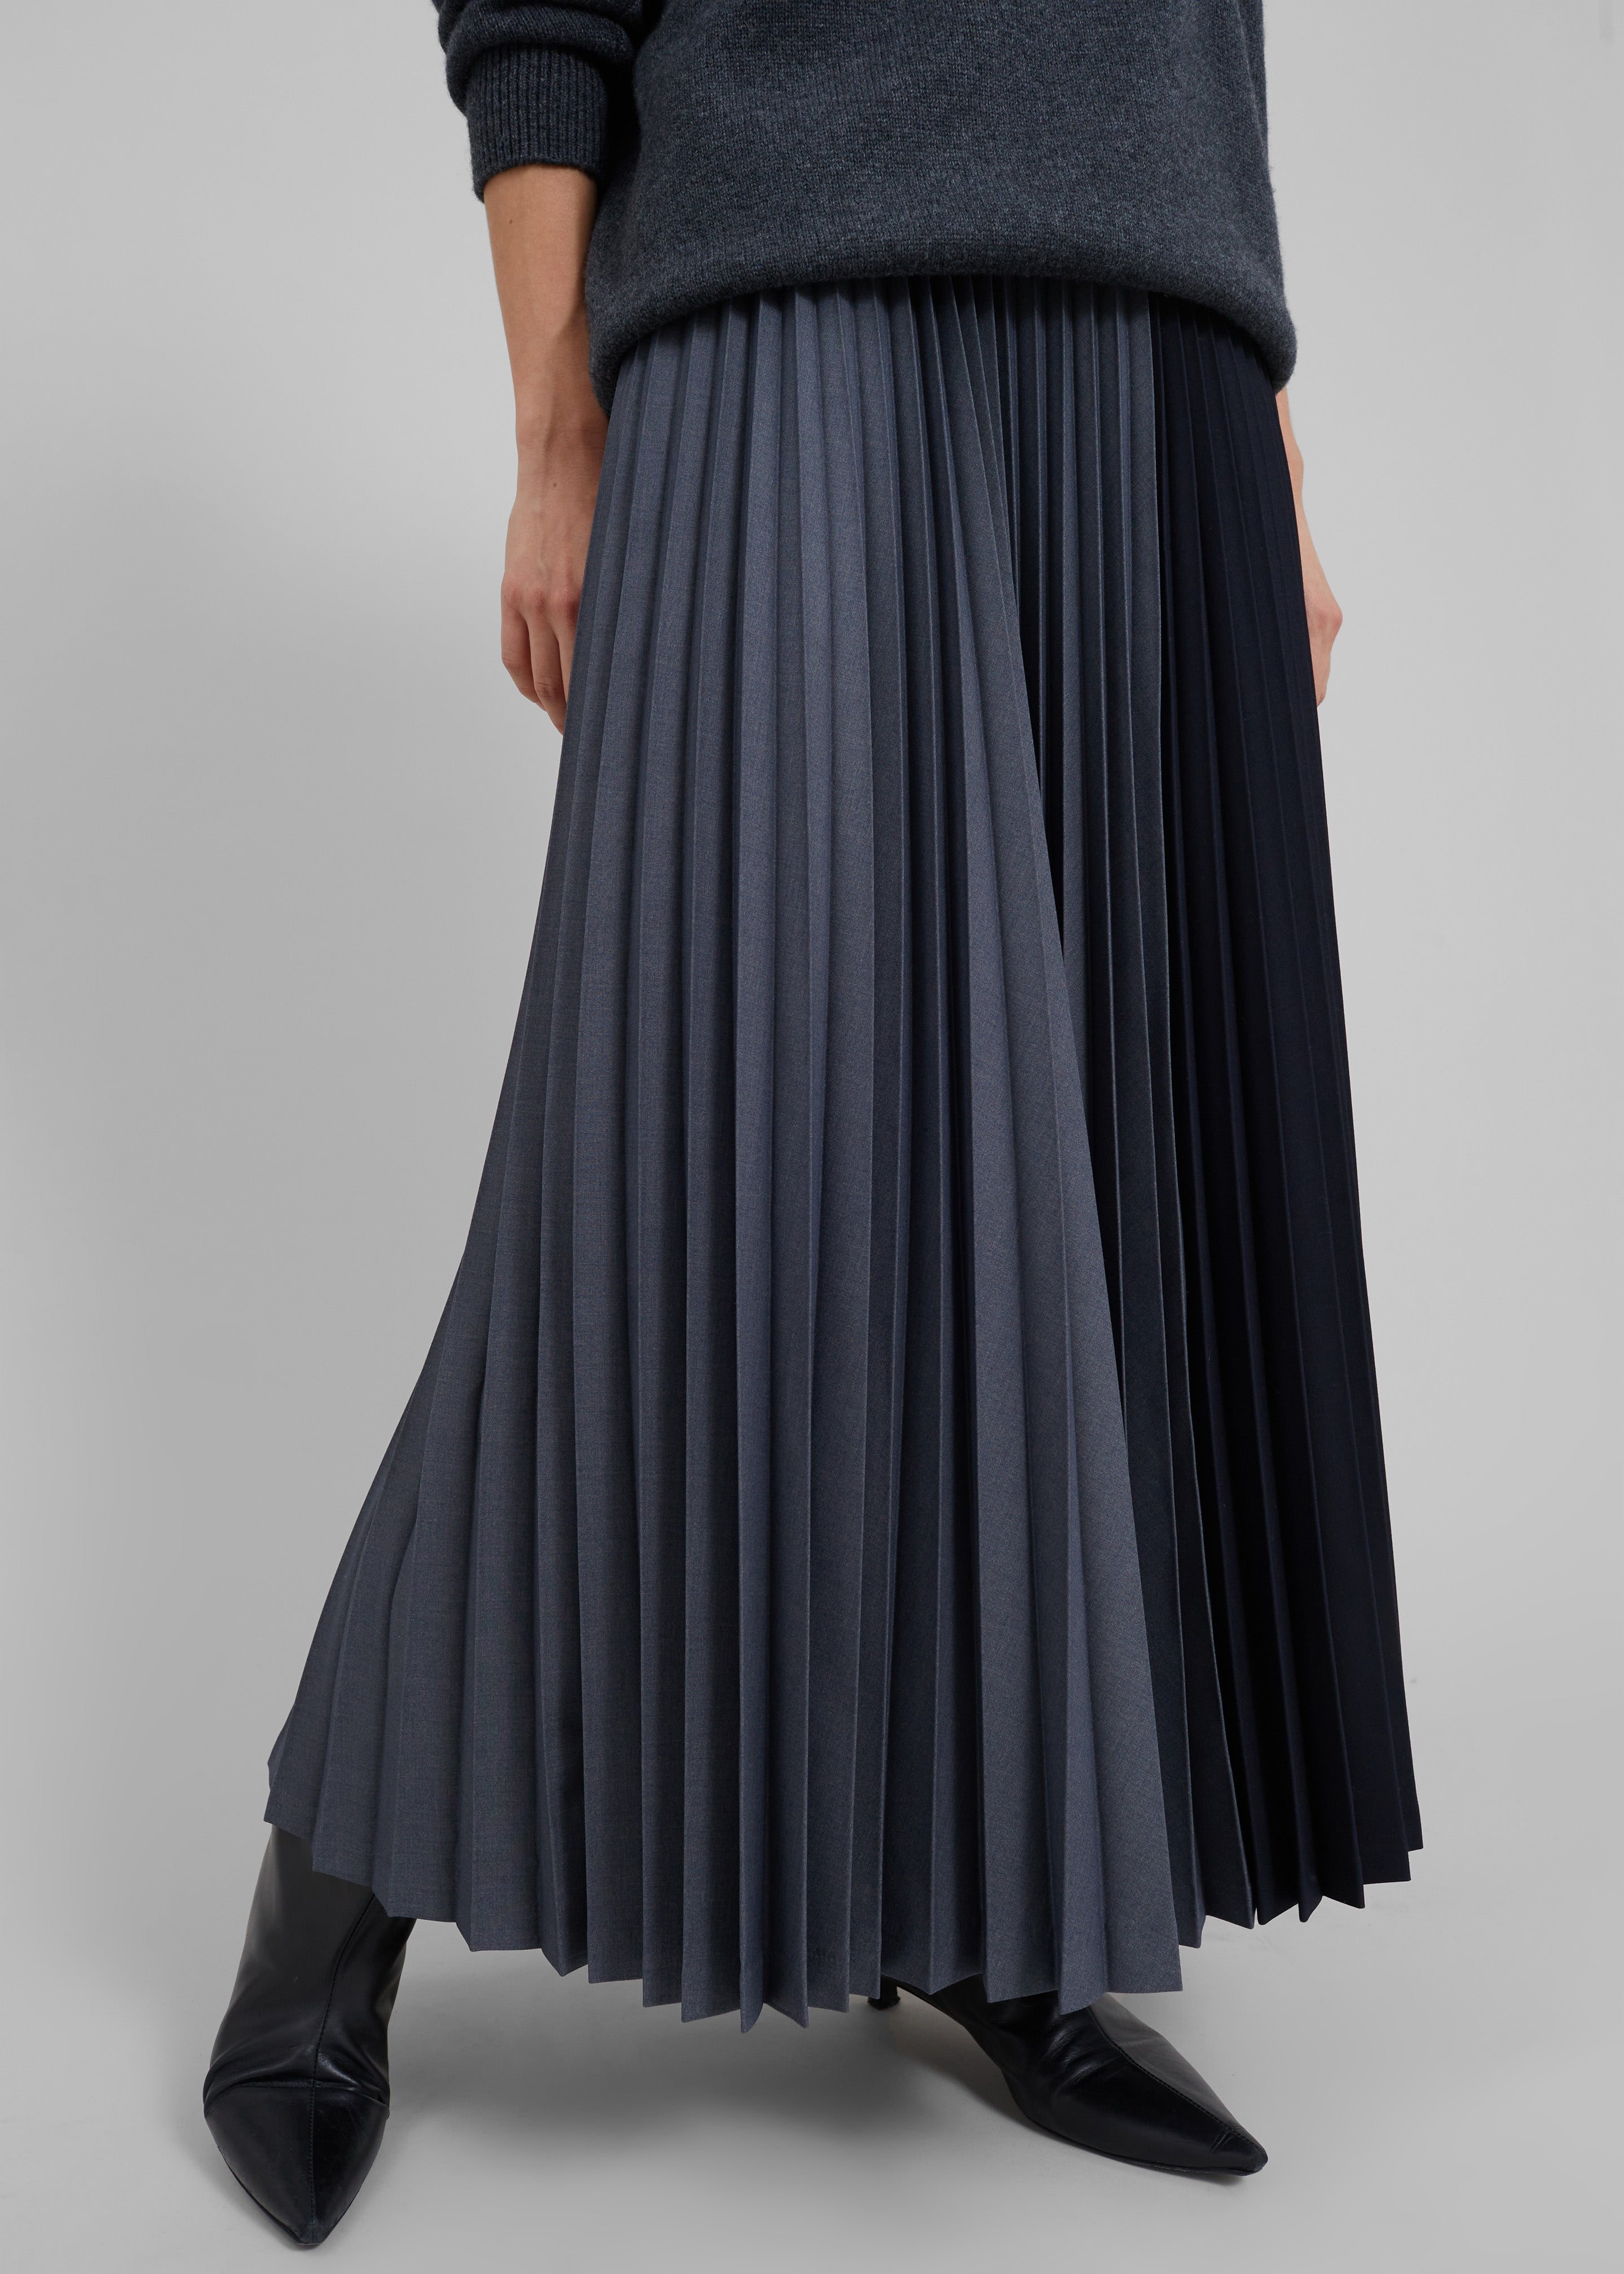 Orem Pleated Skirt - Charcoal - 5